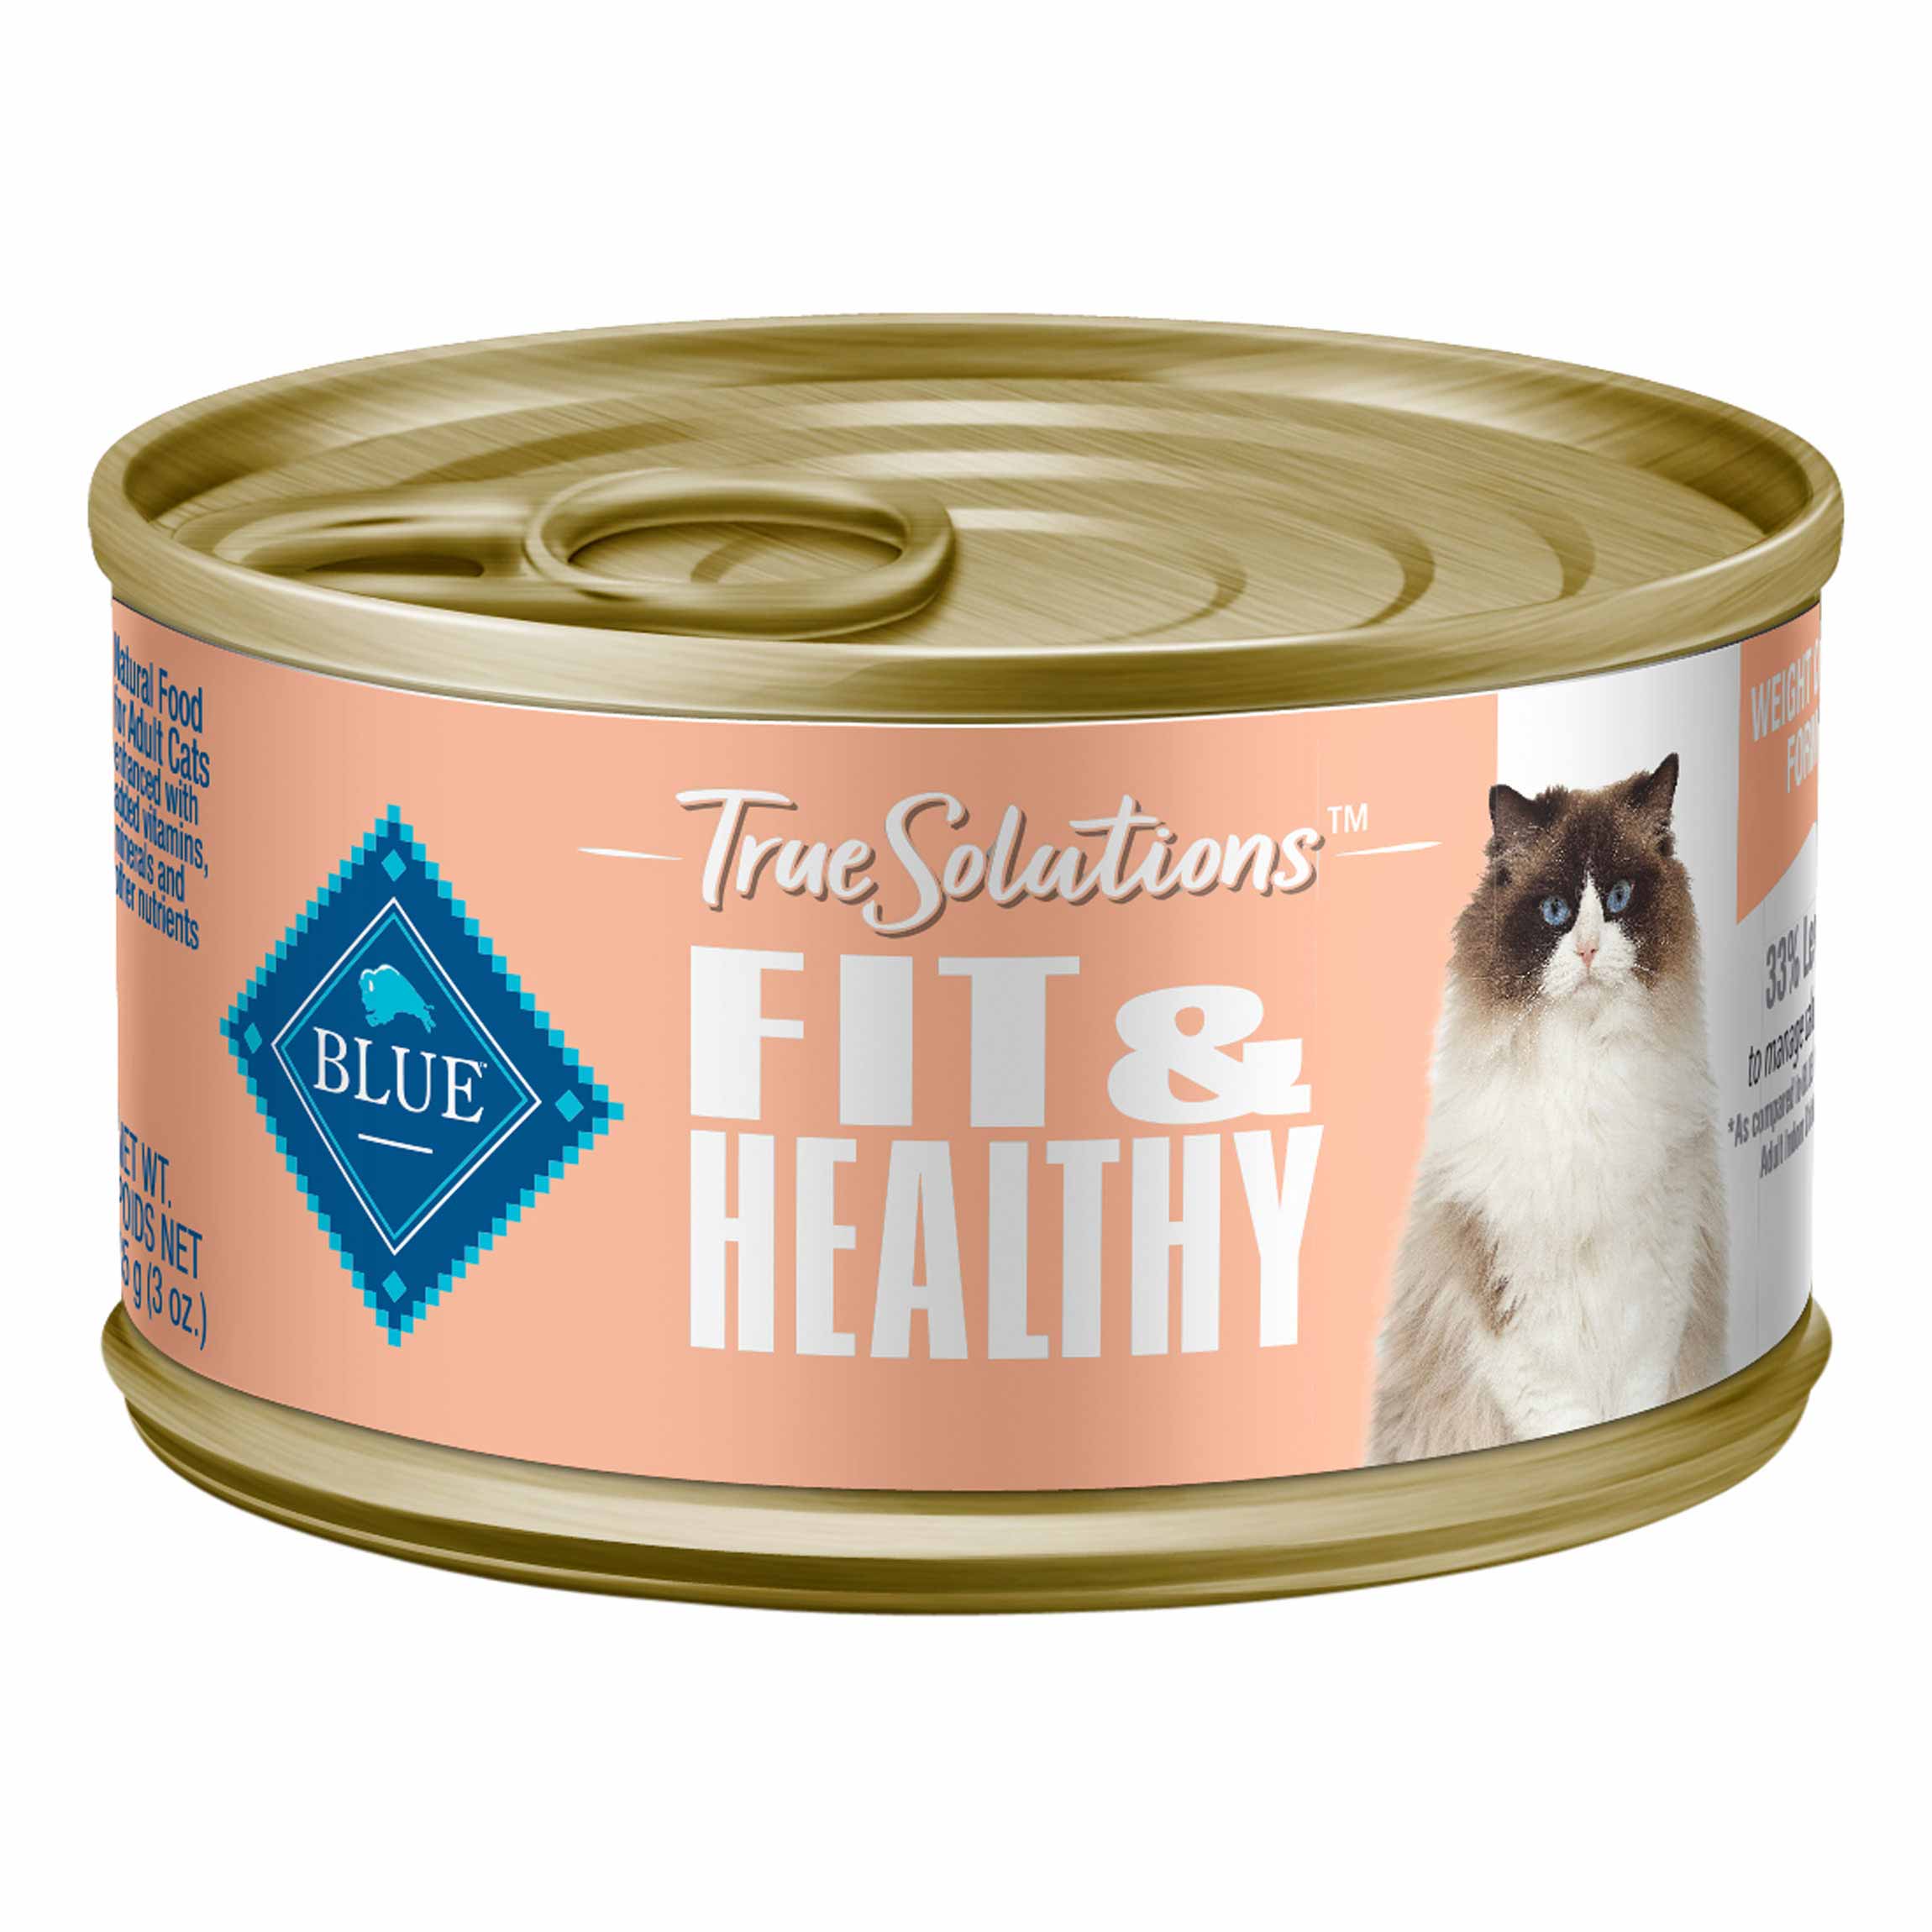 Blue True Solutions Fit & Healthy Wet Cat Food, 3 Ounces